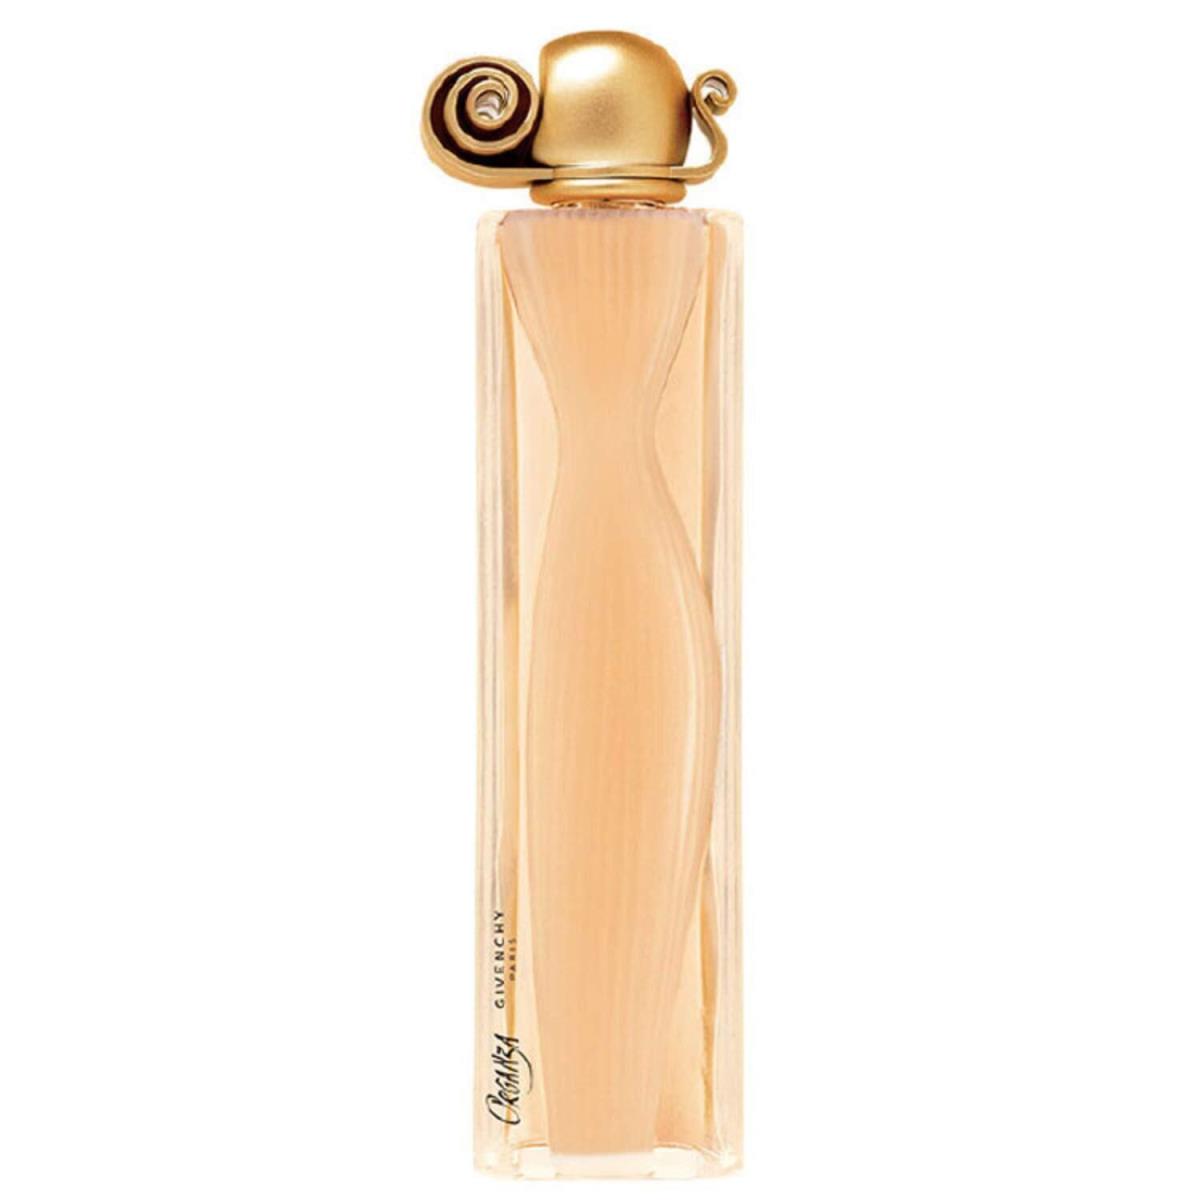 Givenchy Organza For Women. Eau De Parfum Spray 3.3 Ounces Packaging May Vary